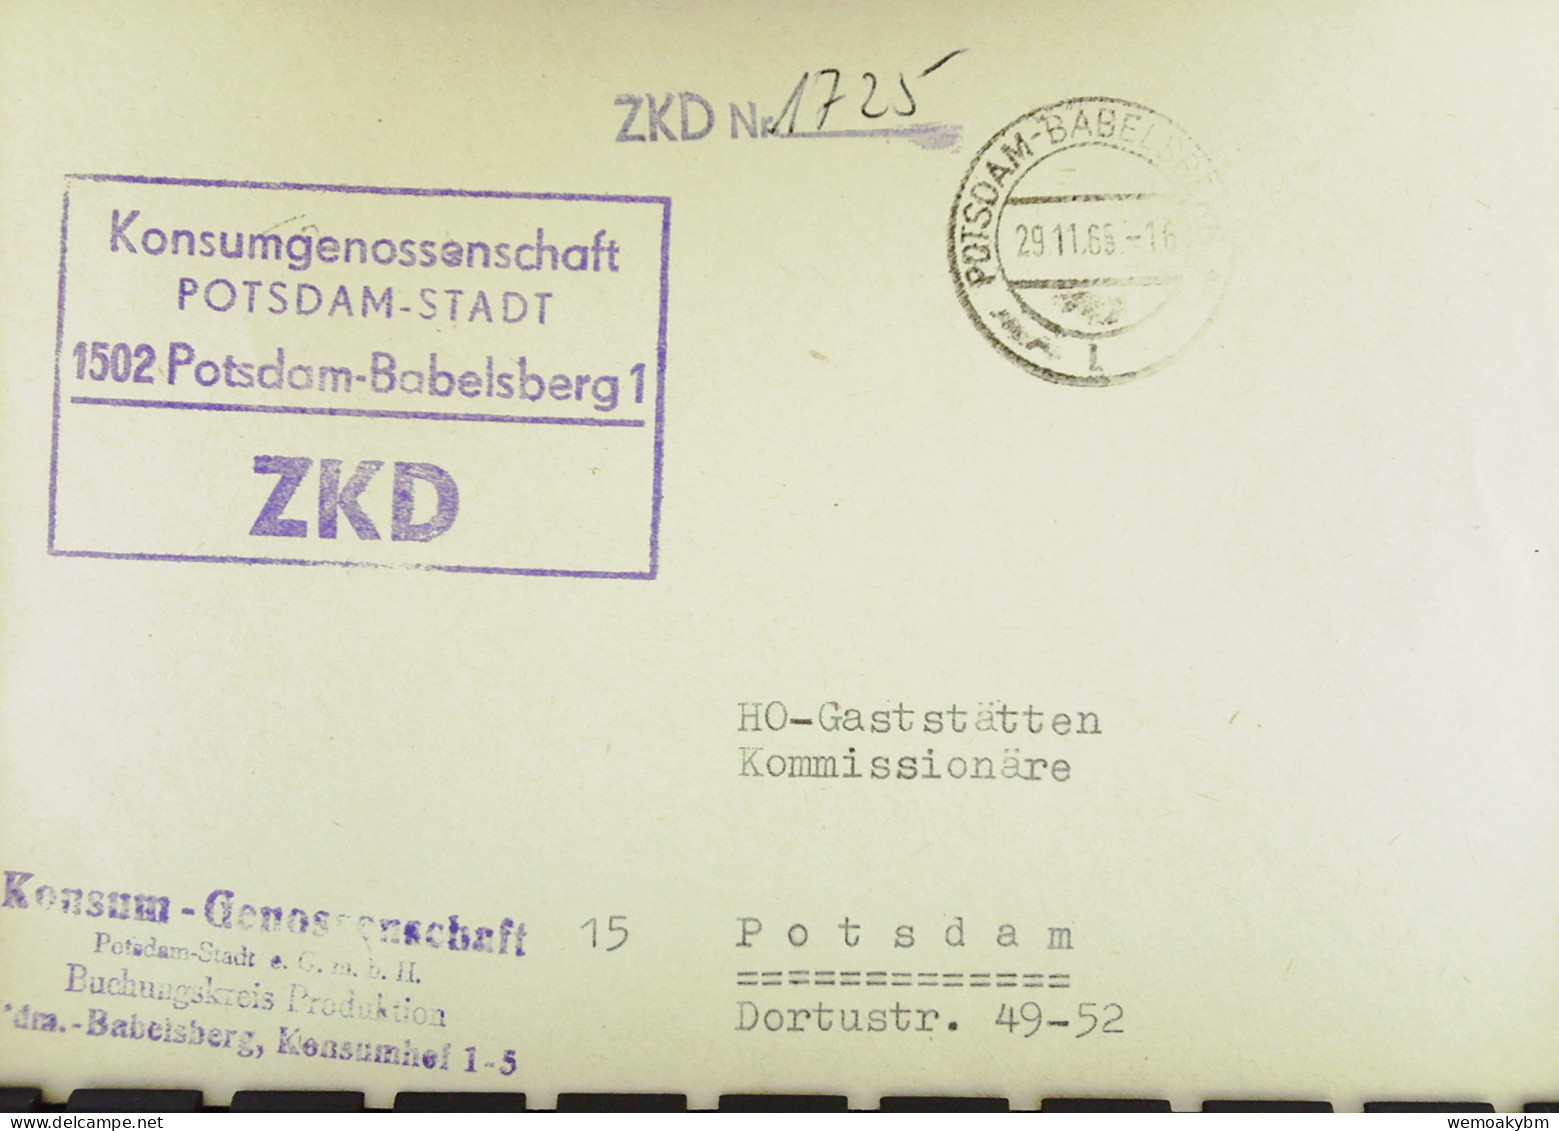 Orts-Brief Mit ZKD-Kastenstpl. "Konsum-Genossenschaft P-Stadt 1502 Potsdam-Babelsberg1" Vom 29.11.65 An HO Potsdam-Stadt - Zentraler Kurierdienst